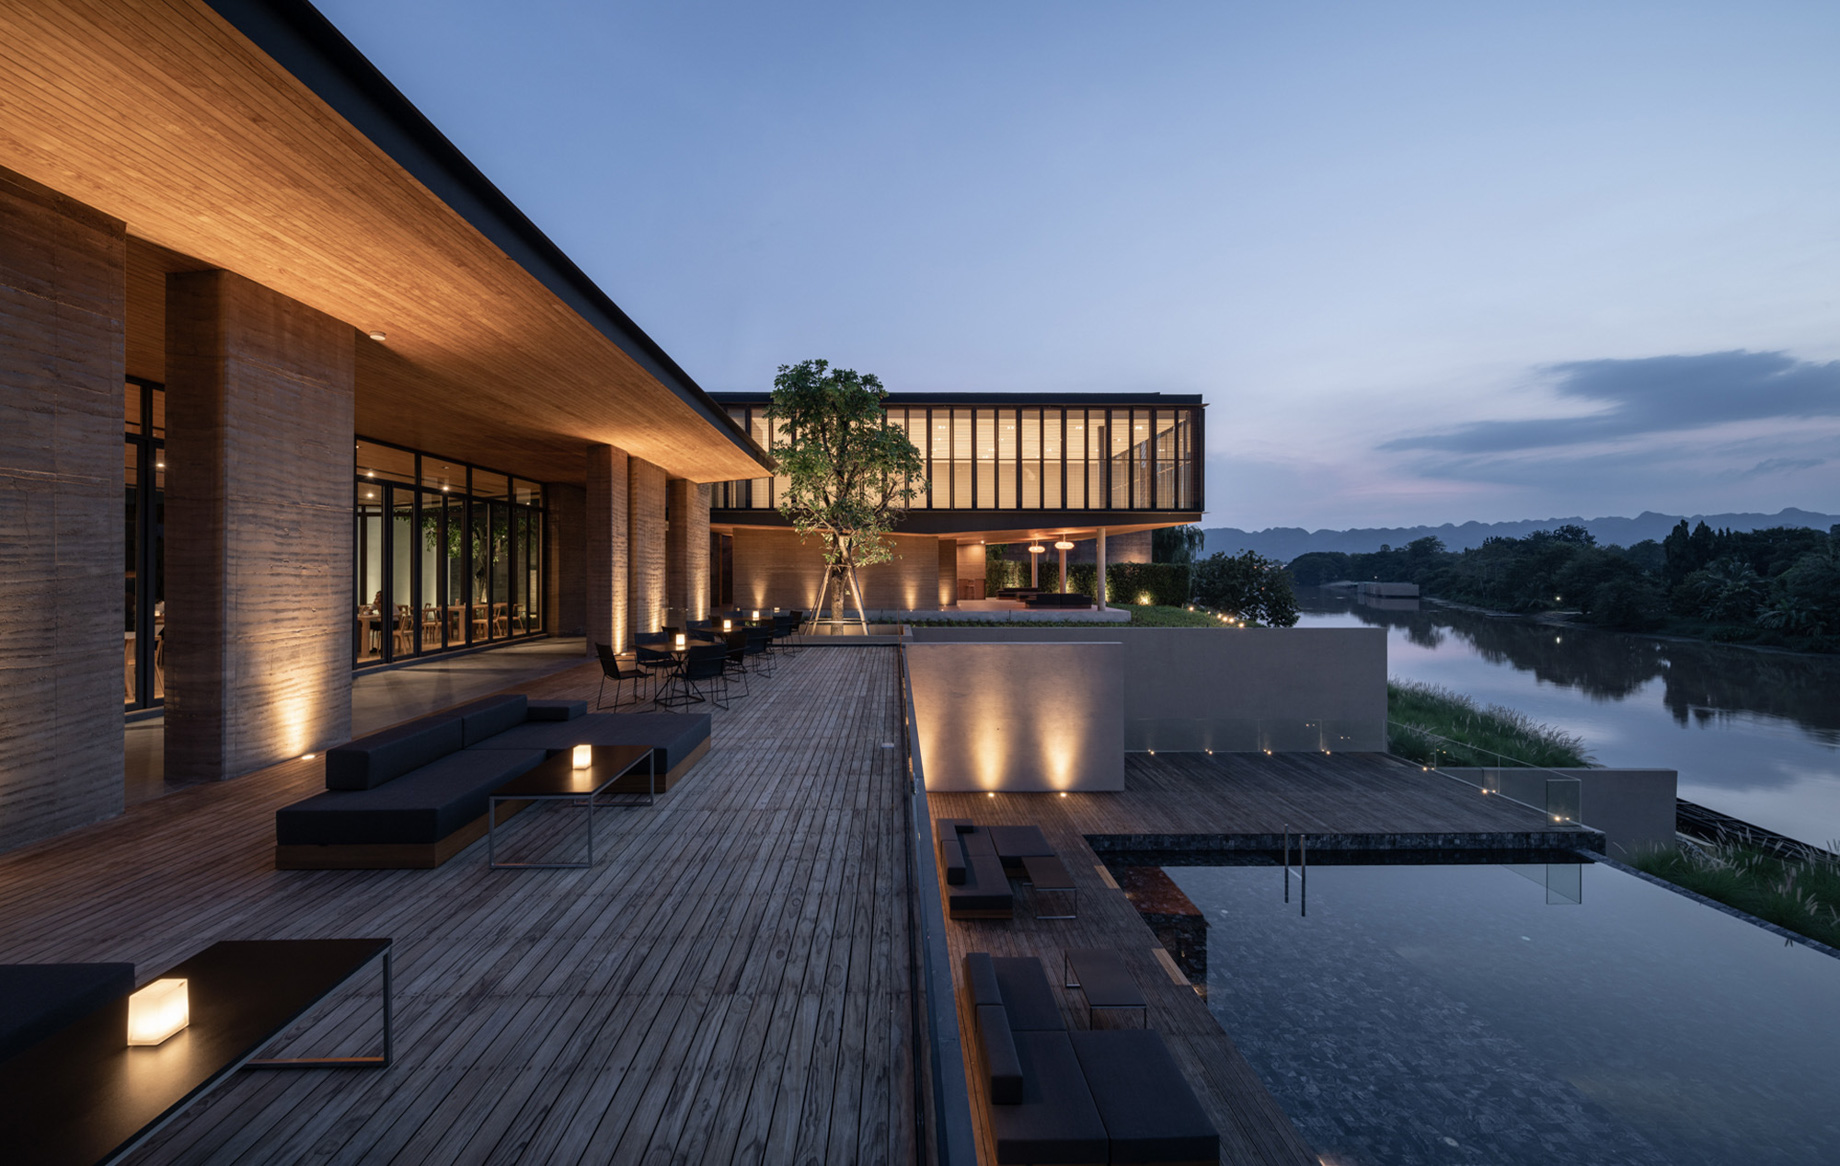 Tara Villa Riverkwai Resort - Kanchanaburi, Thailand - Exterior Dining and Pool Terrace Night View